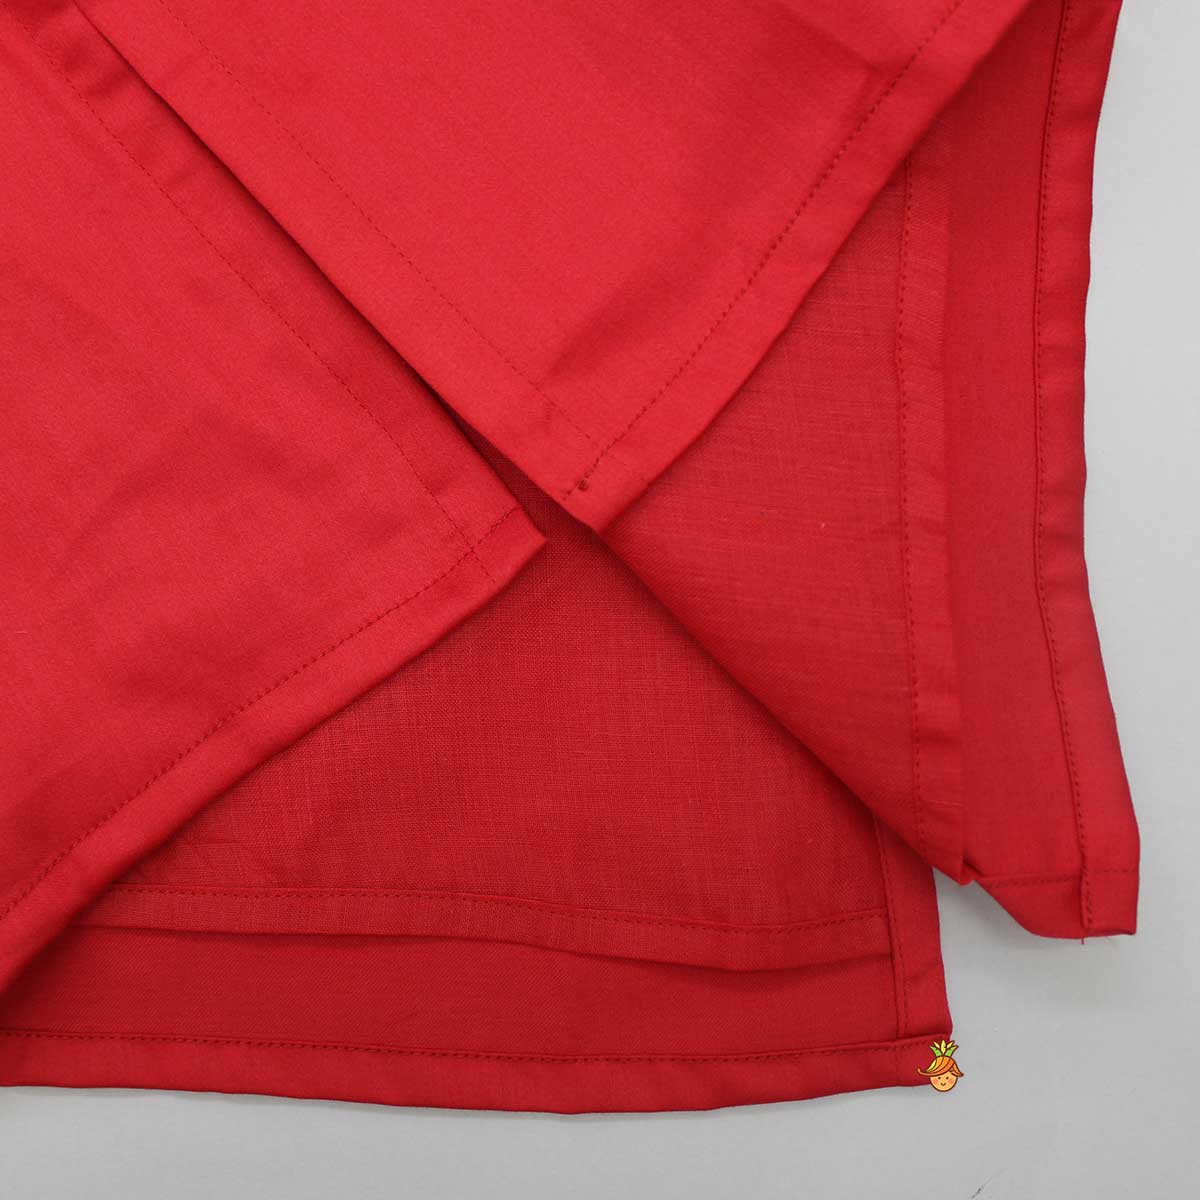 Pre Order: Embroidered Yoke Red Ethnic Kurta And Pyjama